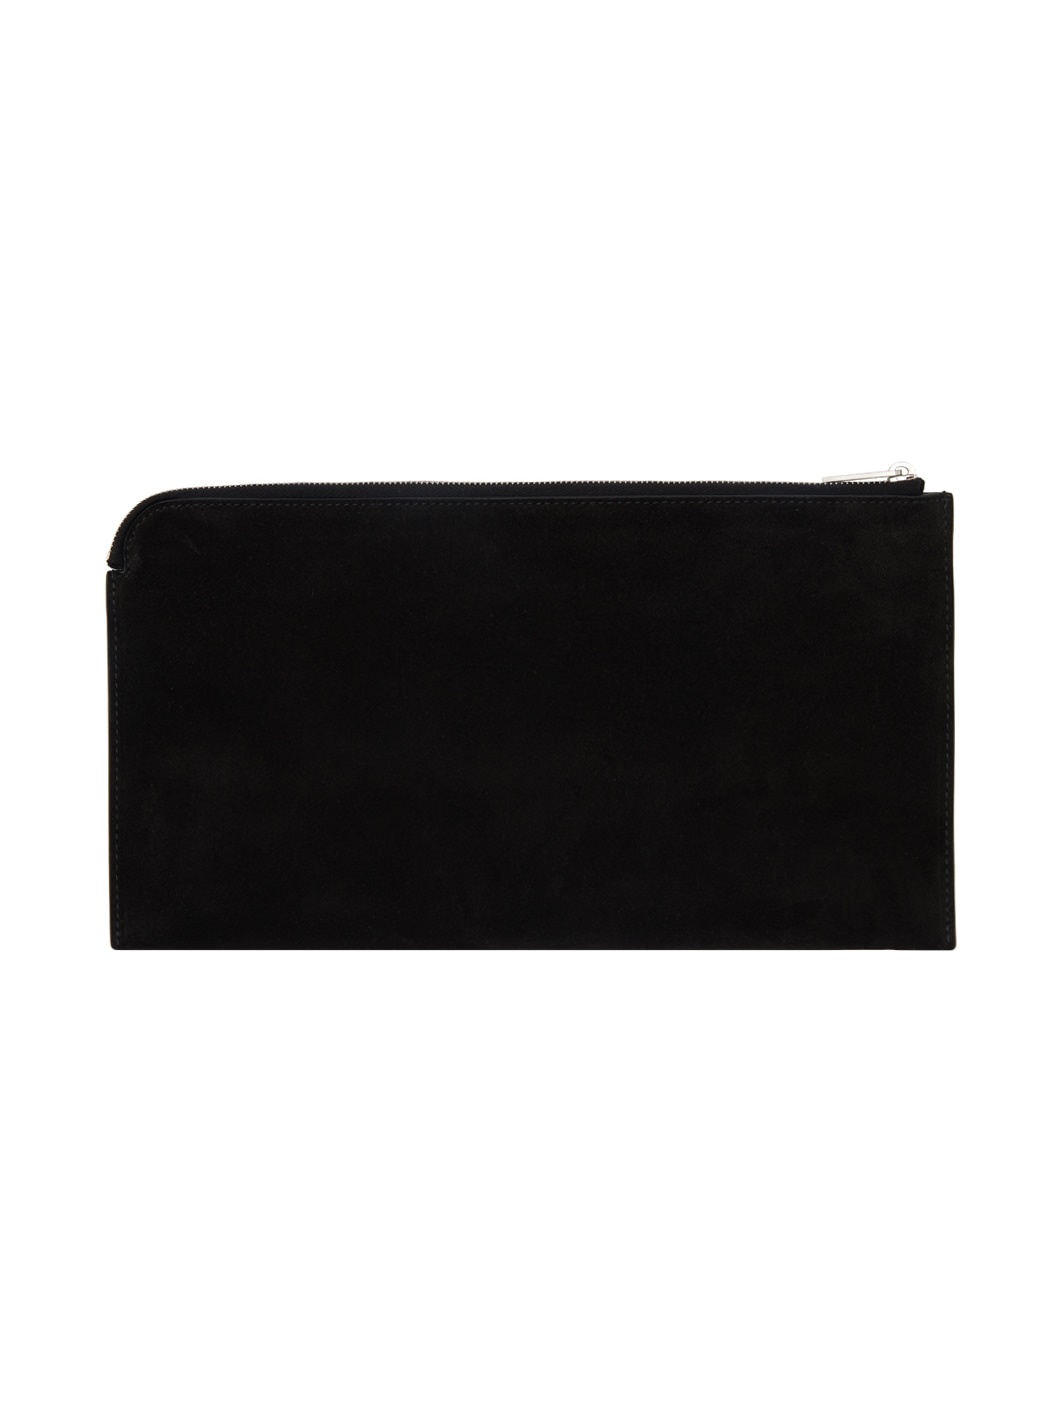 Black Invite Envelope Wallet - 2